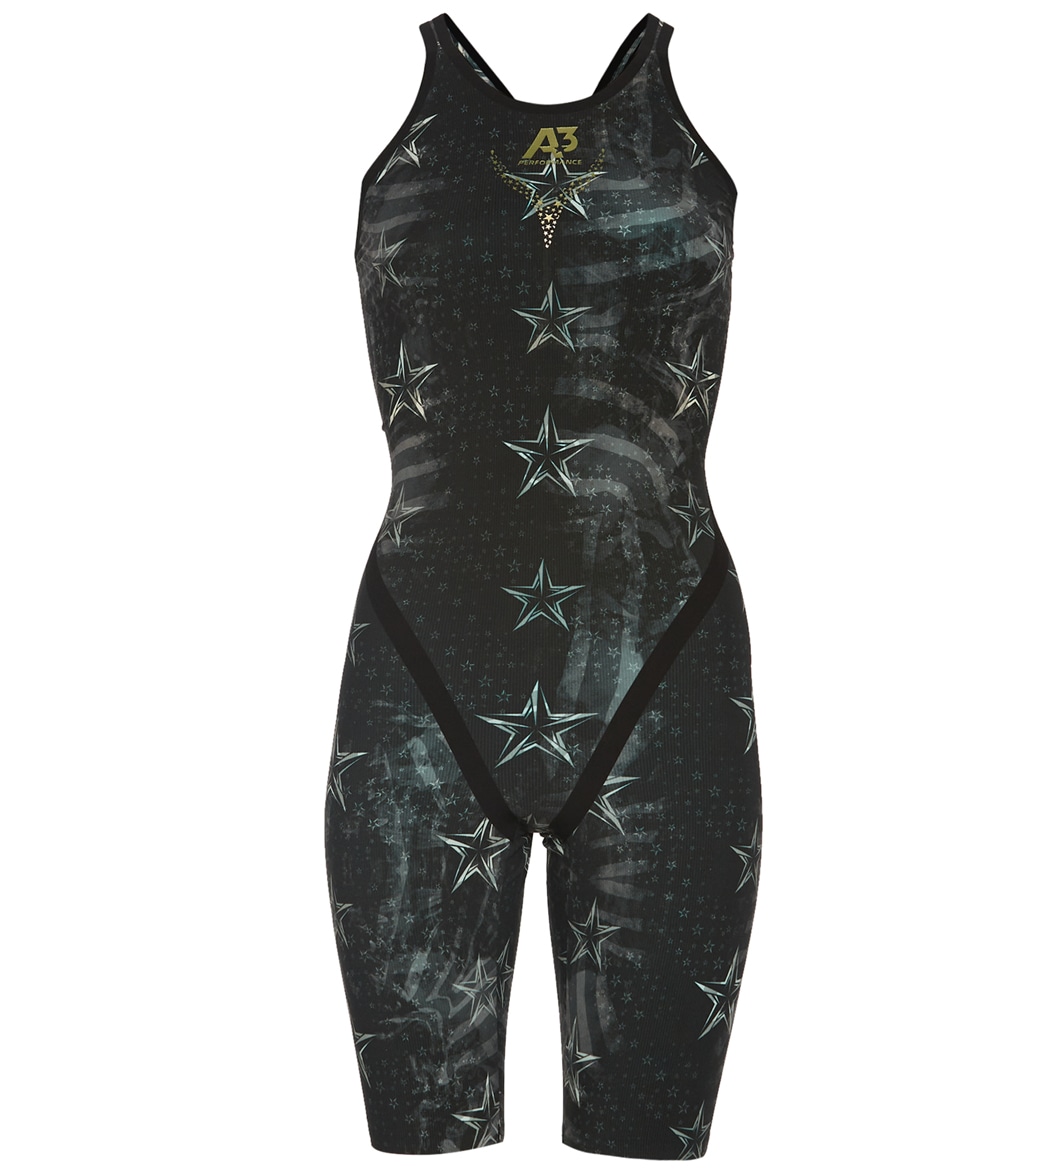 A3 Performance Women's Phenom Closed Back Tech Suit Swimsuit - Black 22 Elastane/Polyamide - Swimoutlet.com